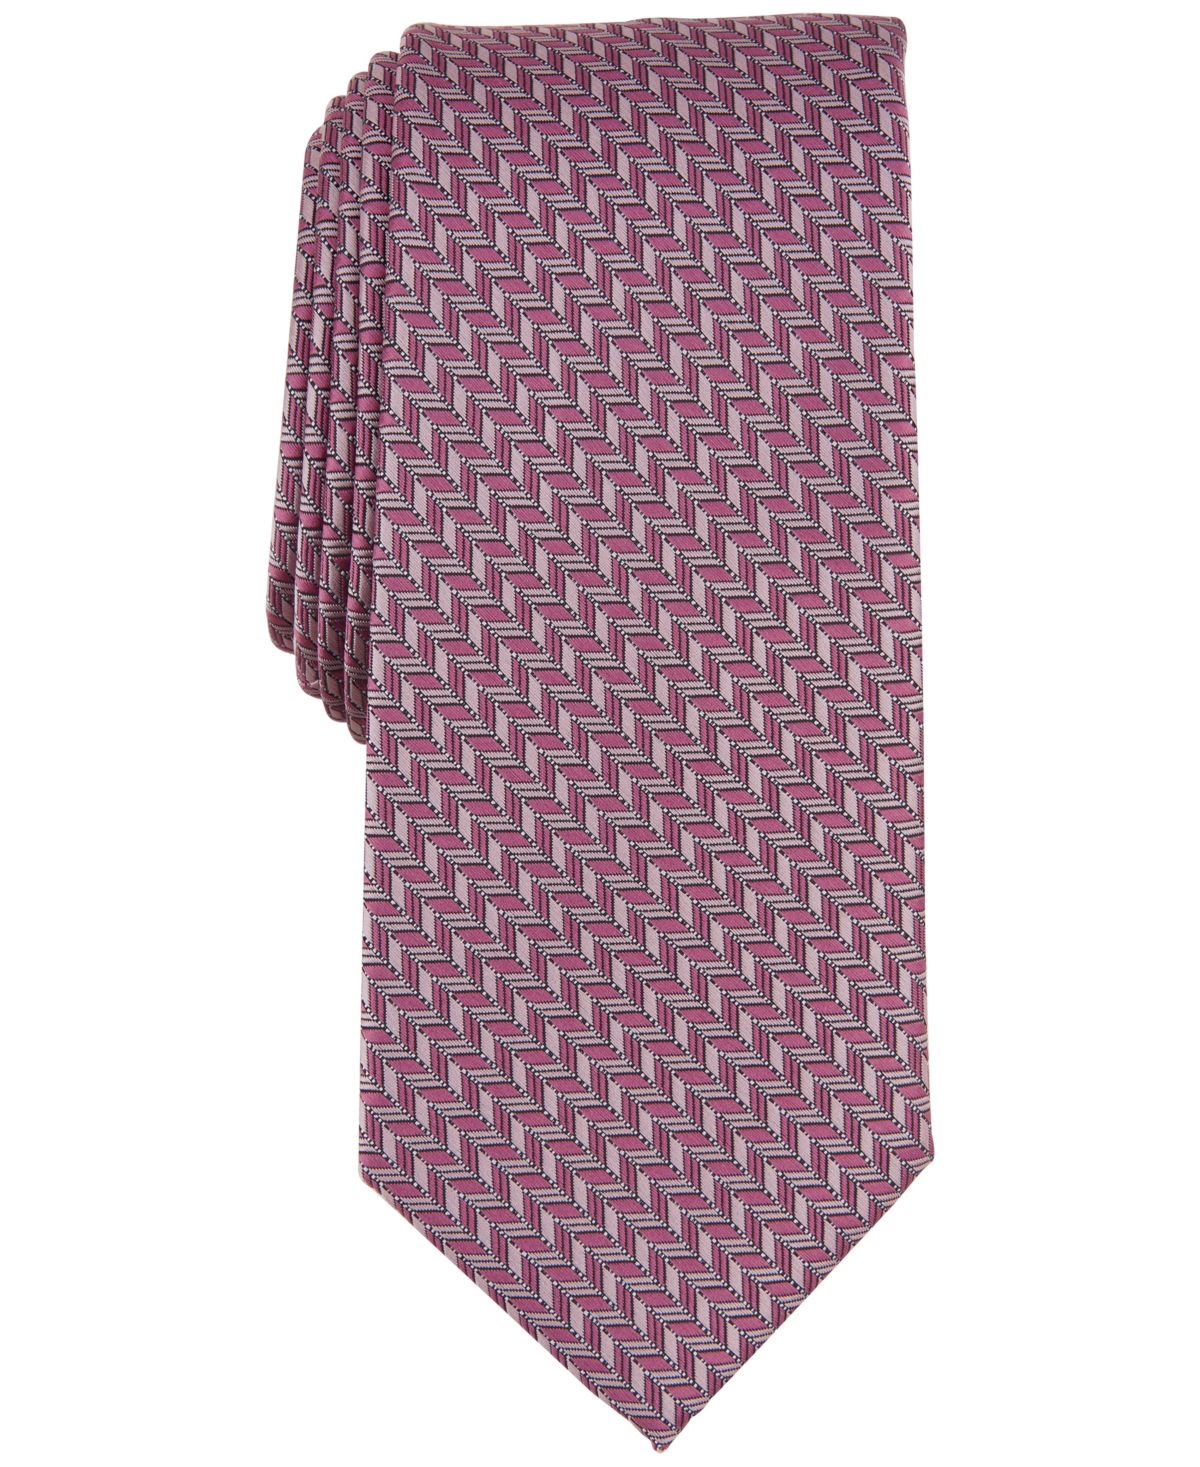 Men's Slim Geometric Tie, Created for Macy's - Pink